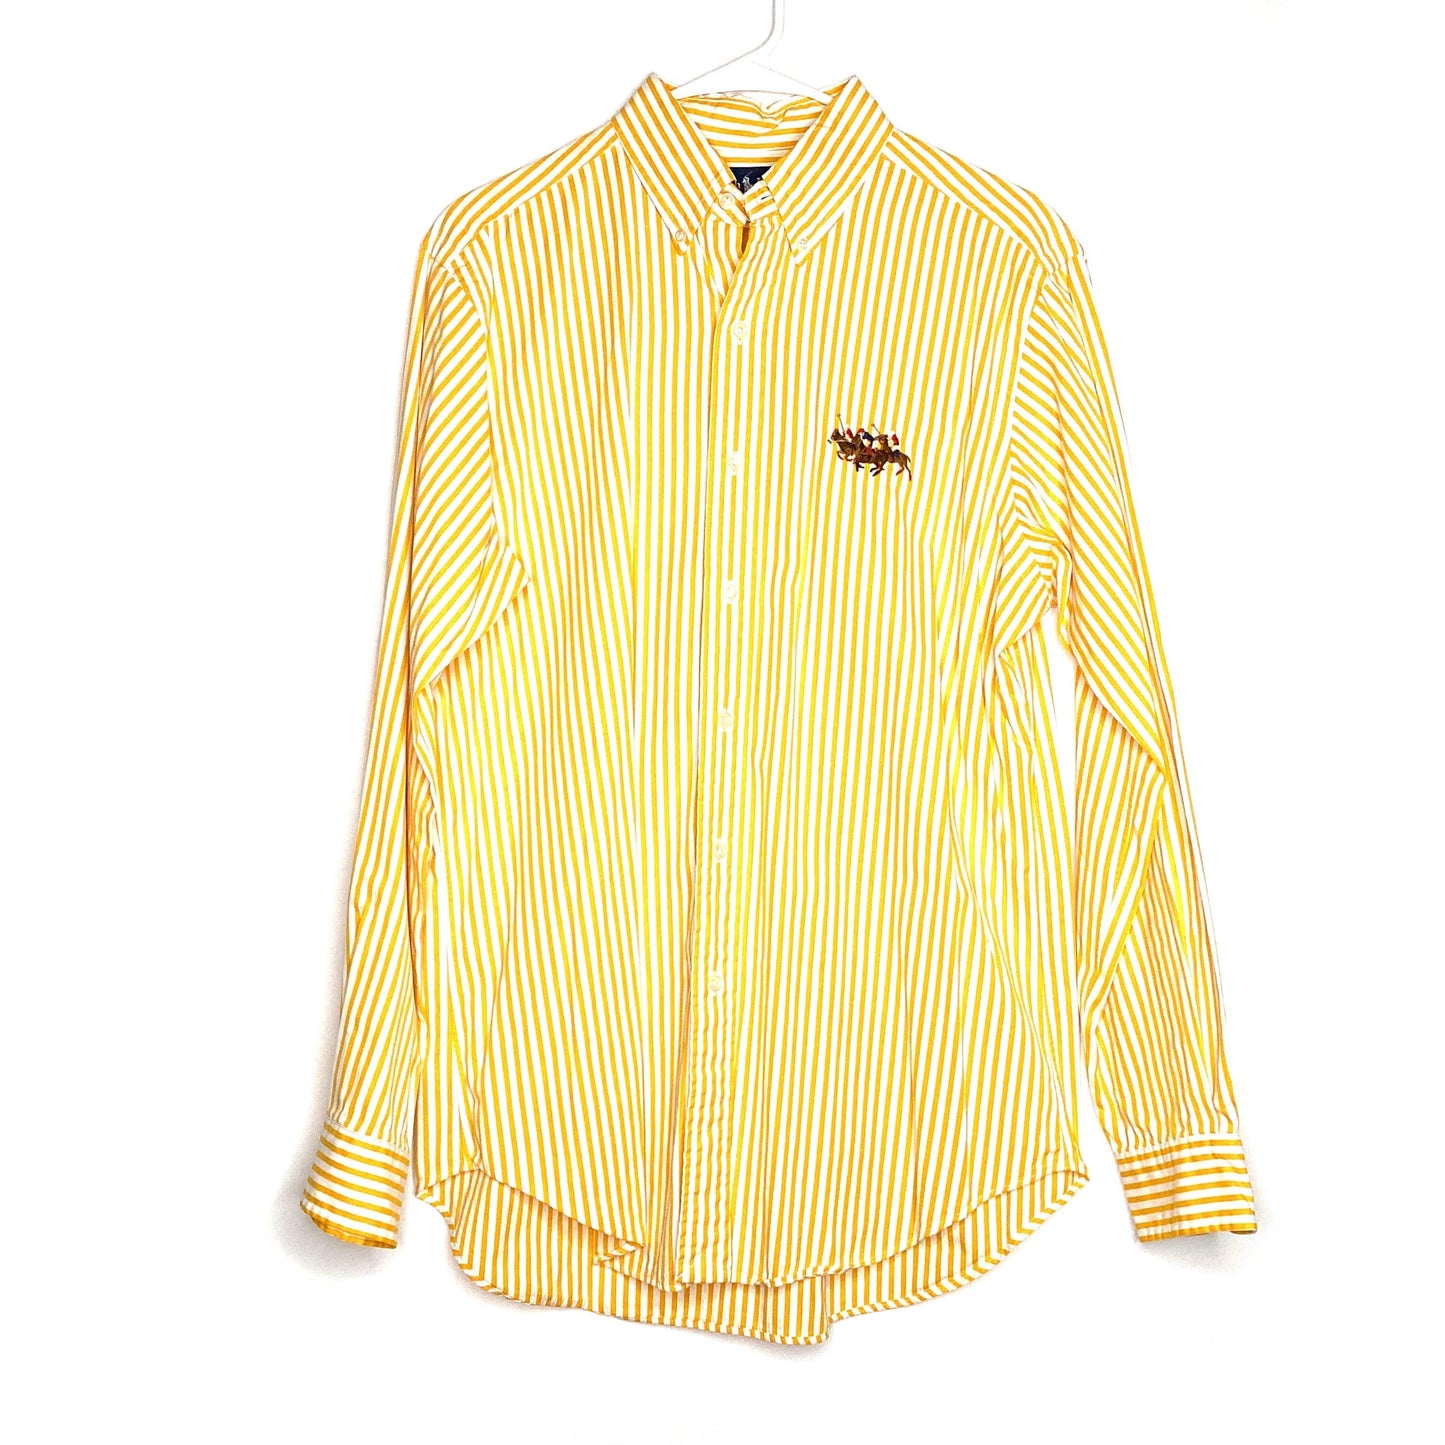 Ralph Lauren Mens Size M Yellow White Striped Classic Fit Dress Shirt Button-Up L/s